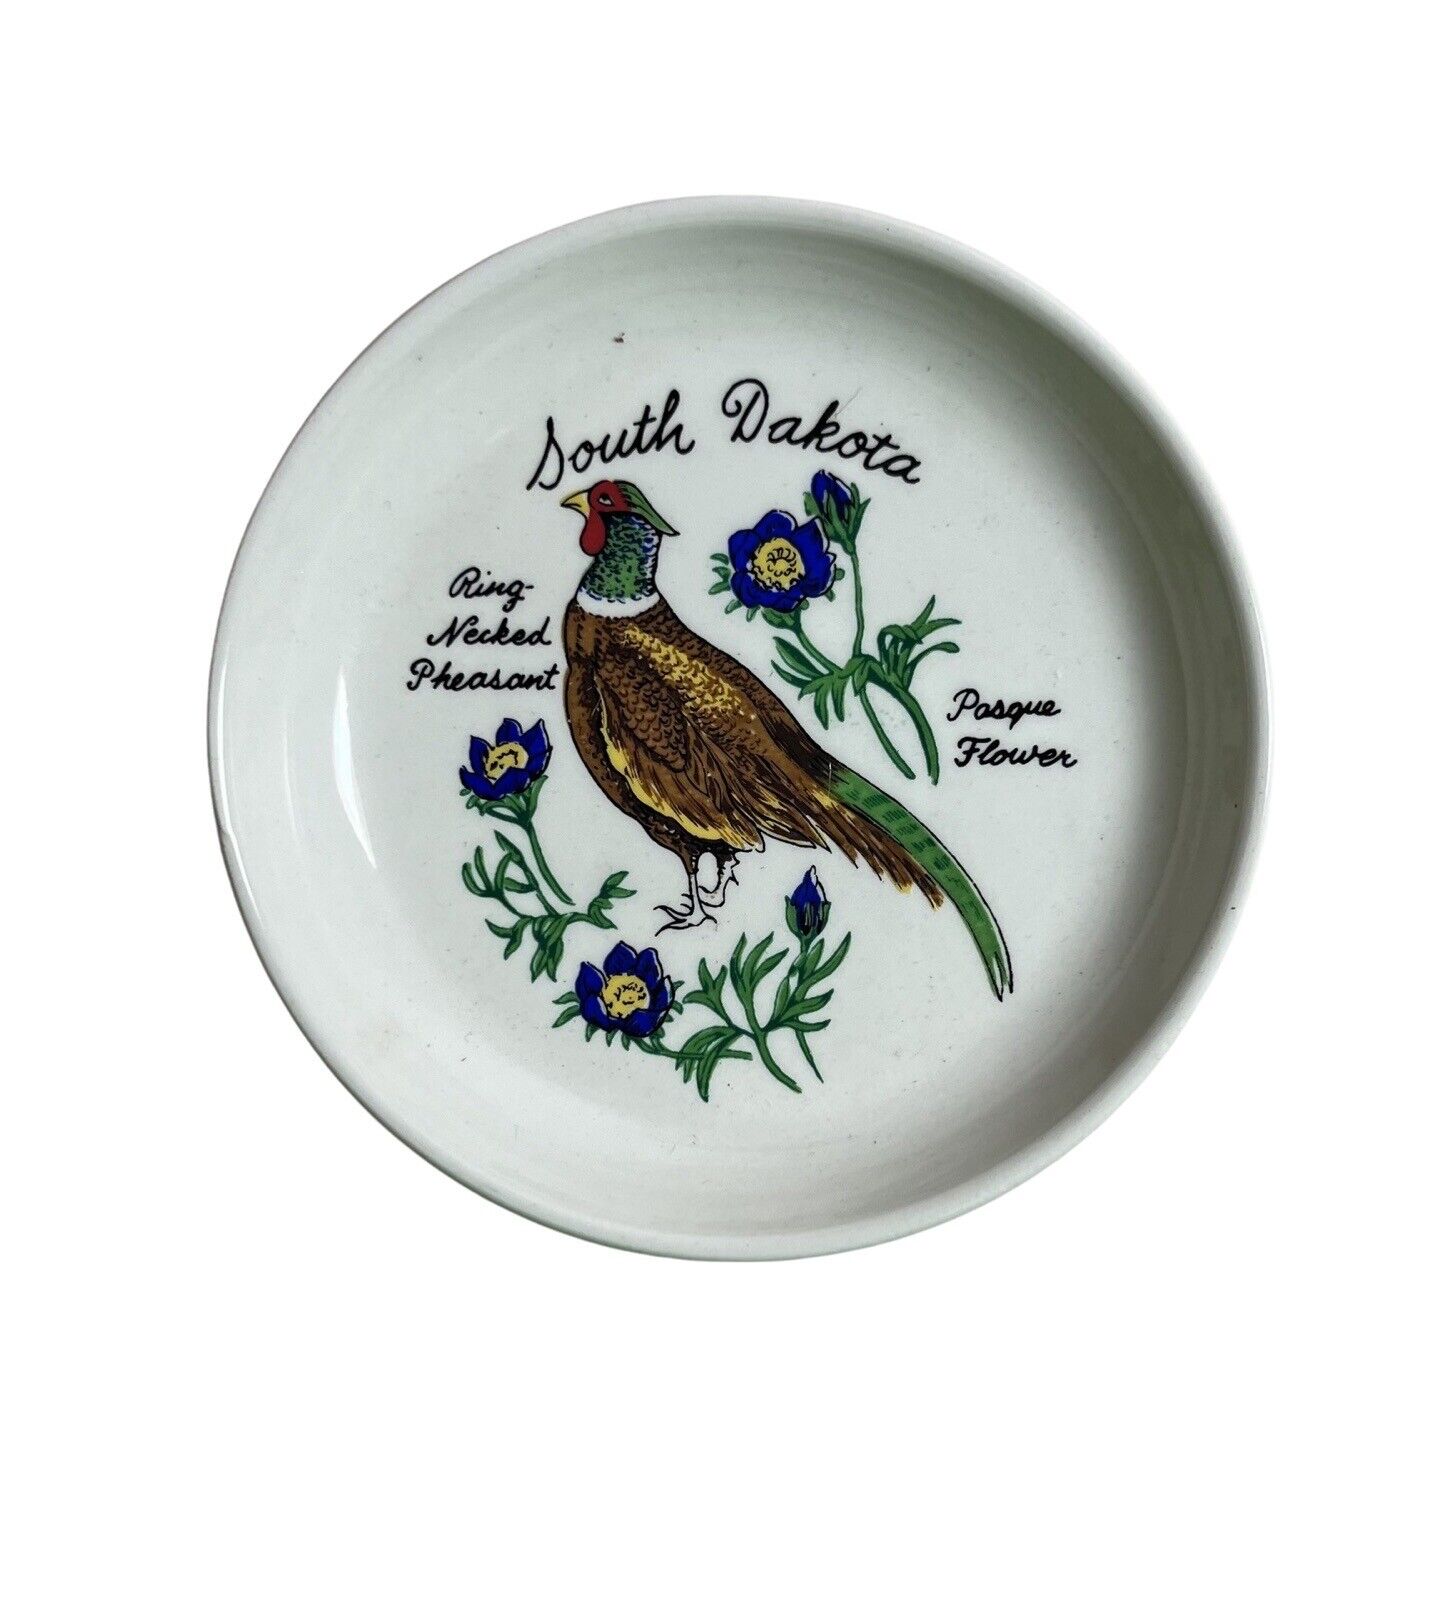 Vintage Souvenir Plate South Dakota Ceramic 4 Inch